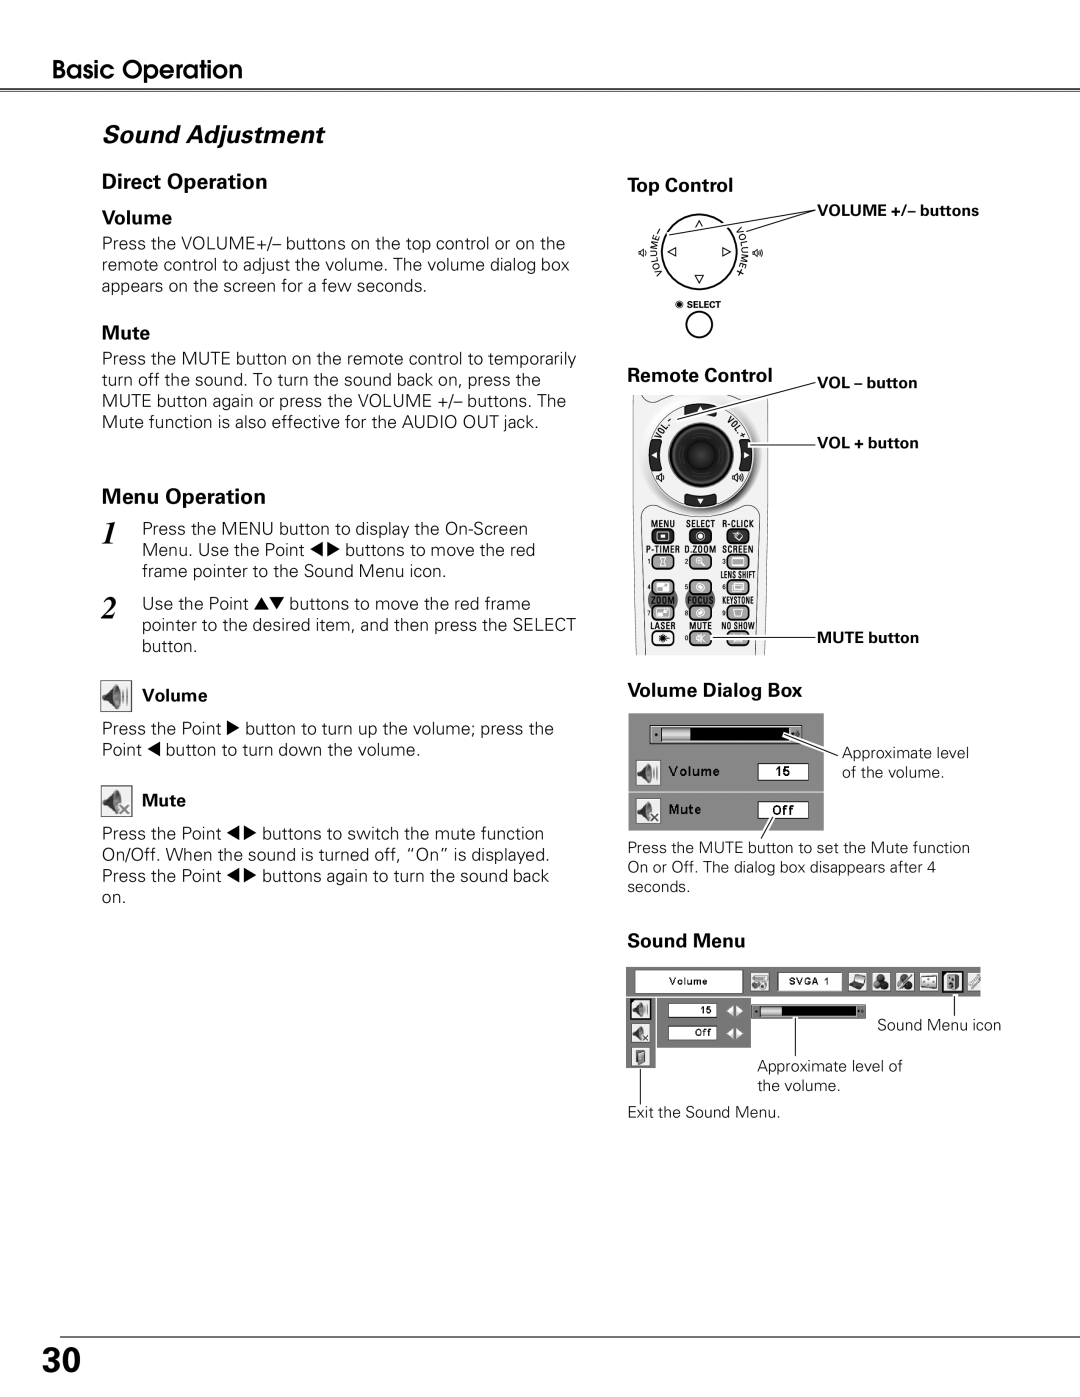 Eiki LC-XG250L Sound Adjustment, Direct Operation, Menu Operation, Mute, Volume Dialog Box, Sound Menu, Top Control 